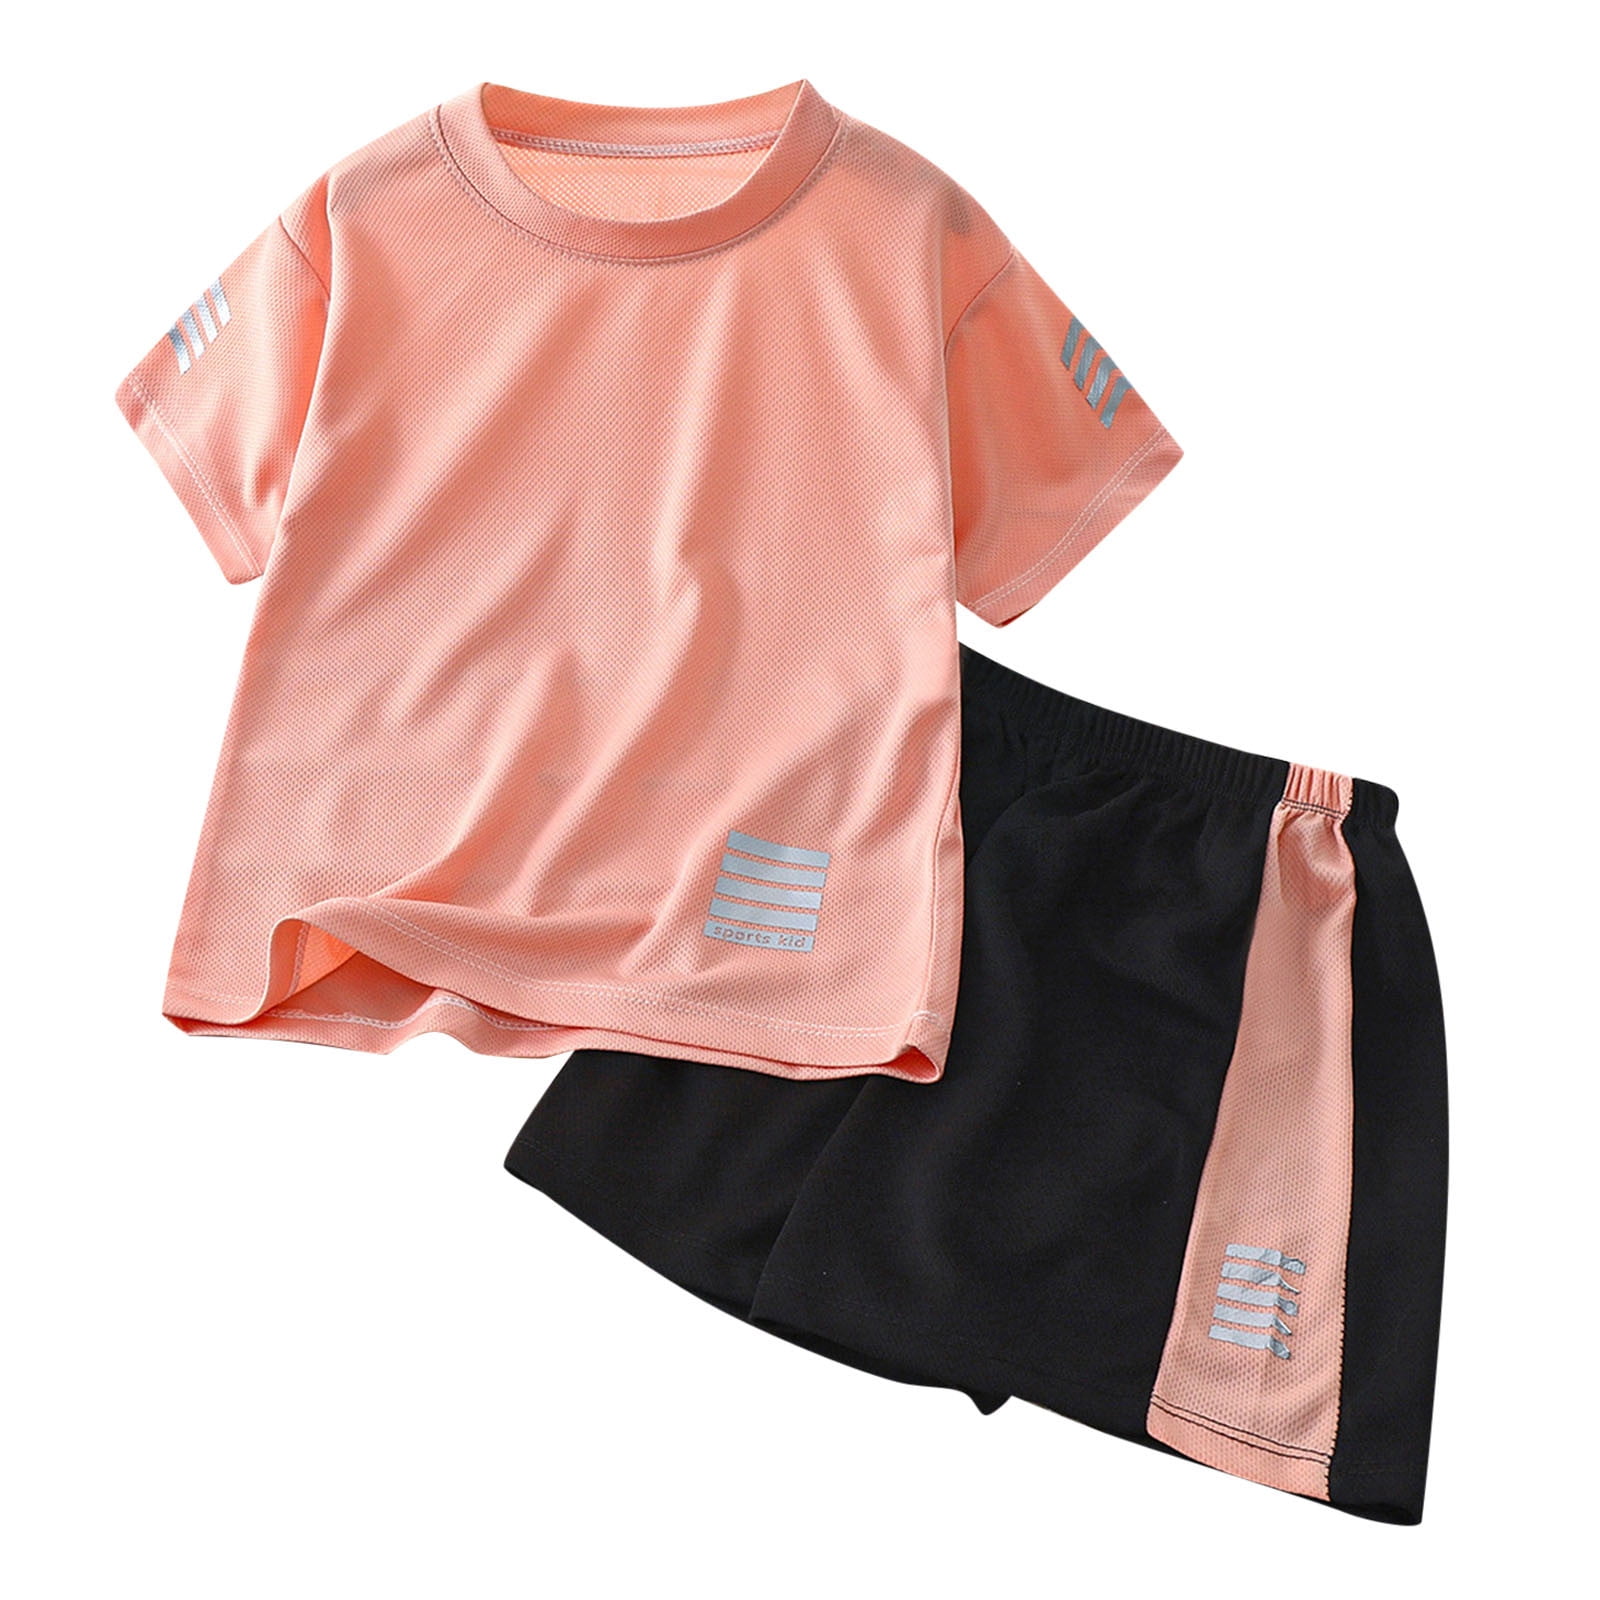 Toddler Boys Girls Fashion Outfits Set Kids Baby Unisex Spring Summer ...